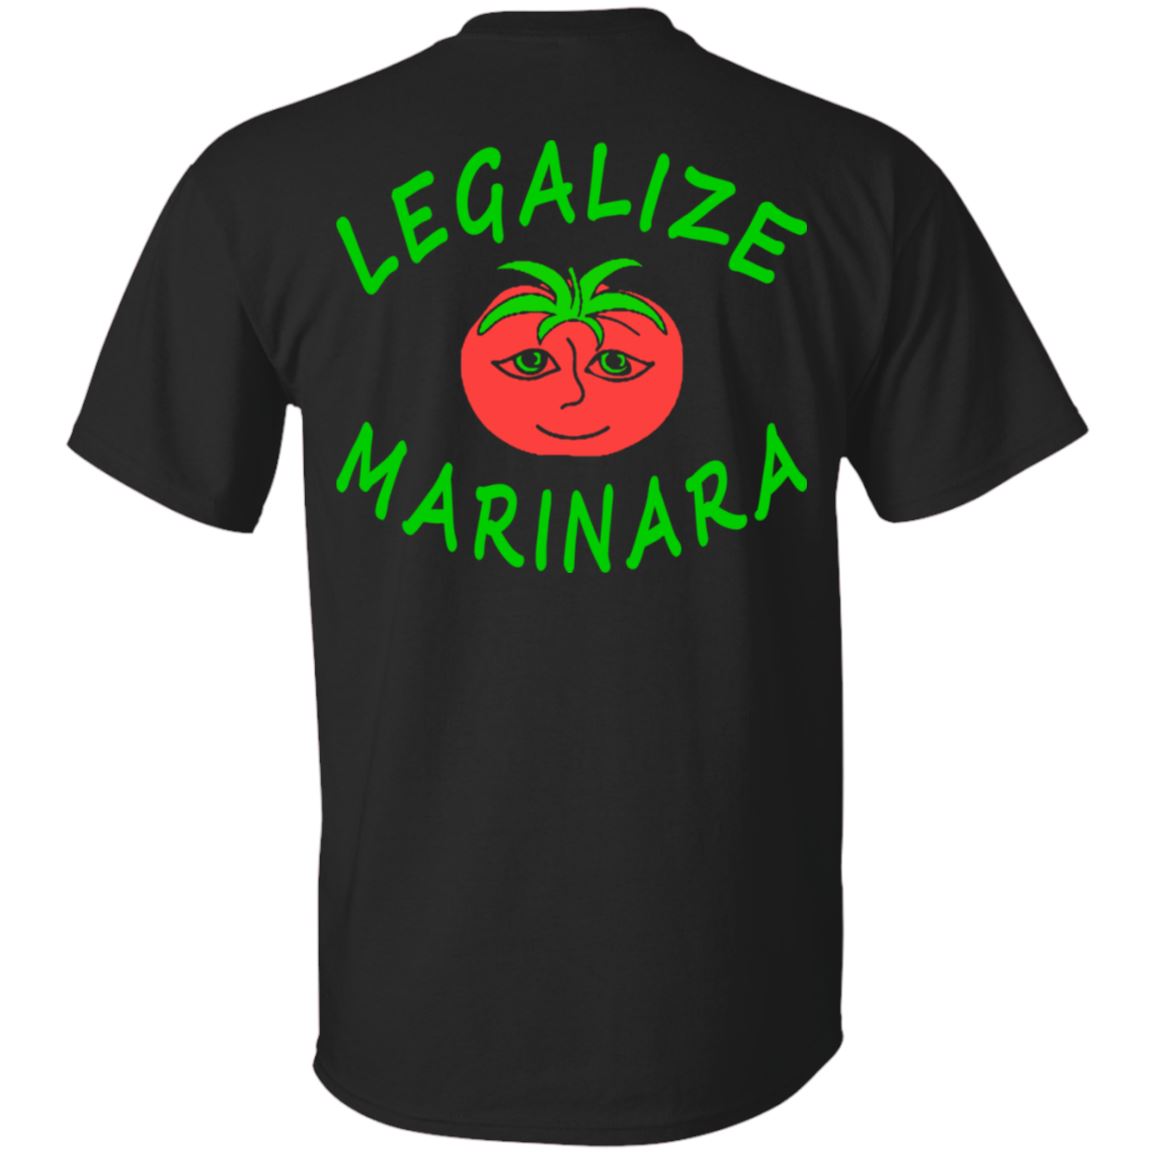 Legalize Marinara - back print